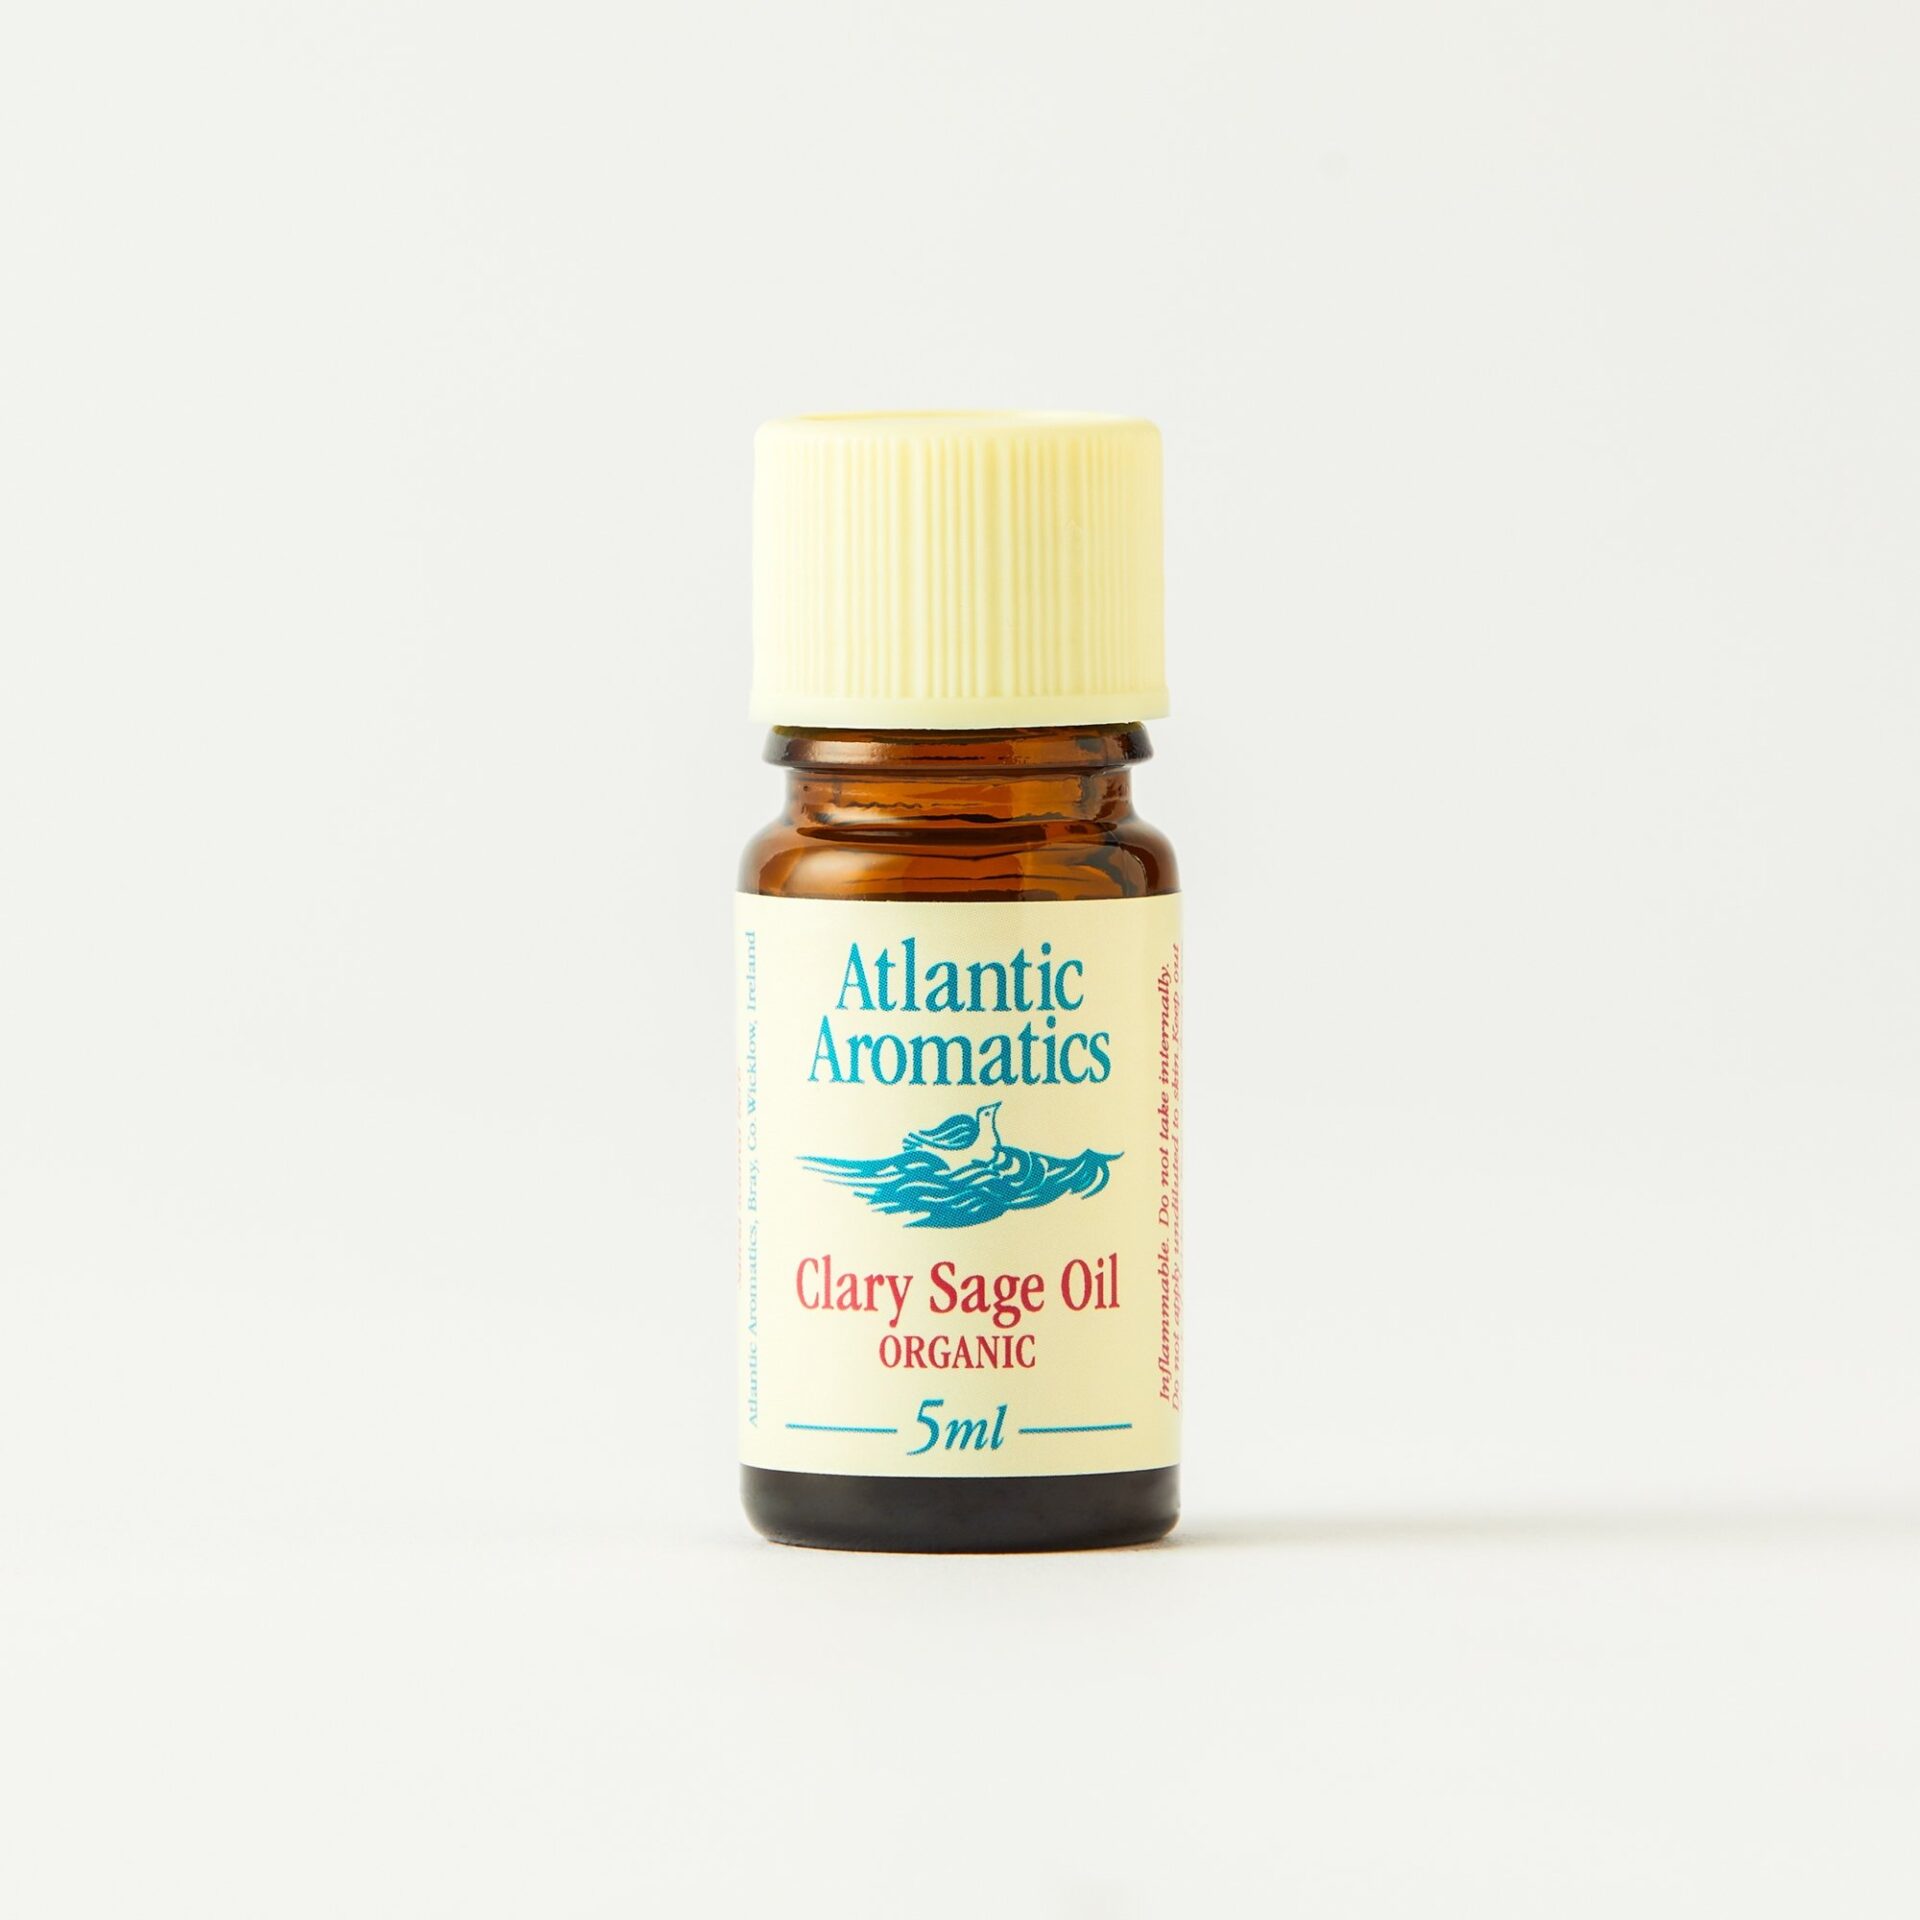 Atlantic Aromatics Clary Sage Oil